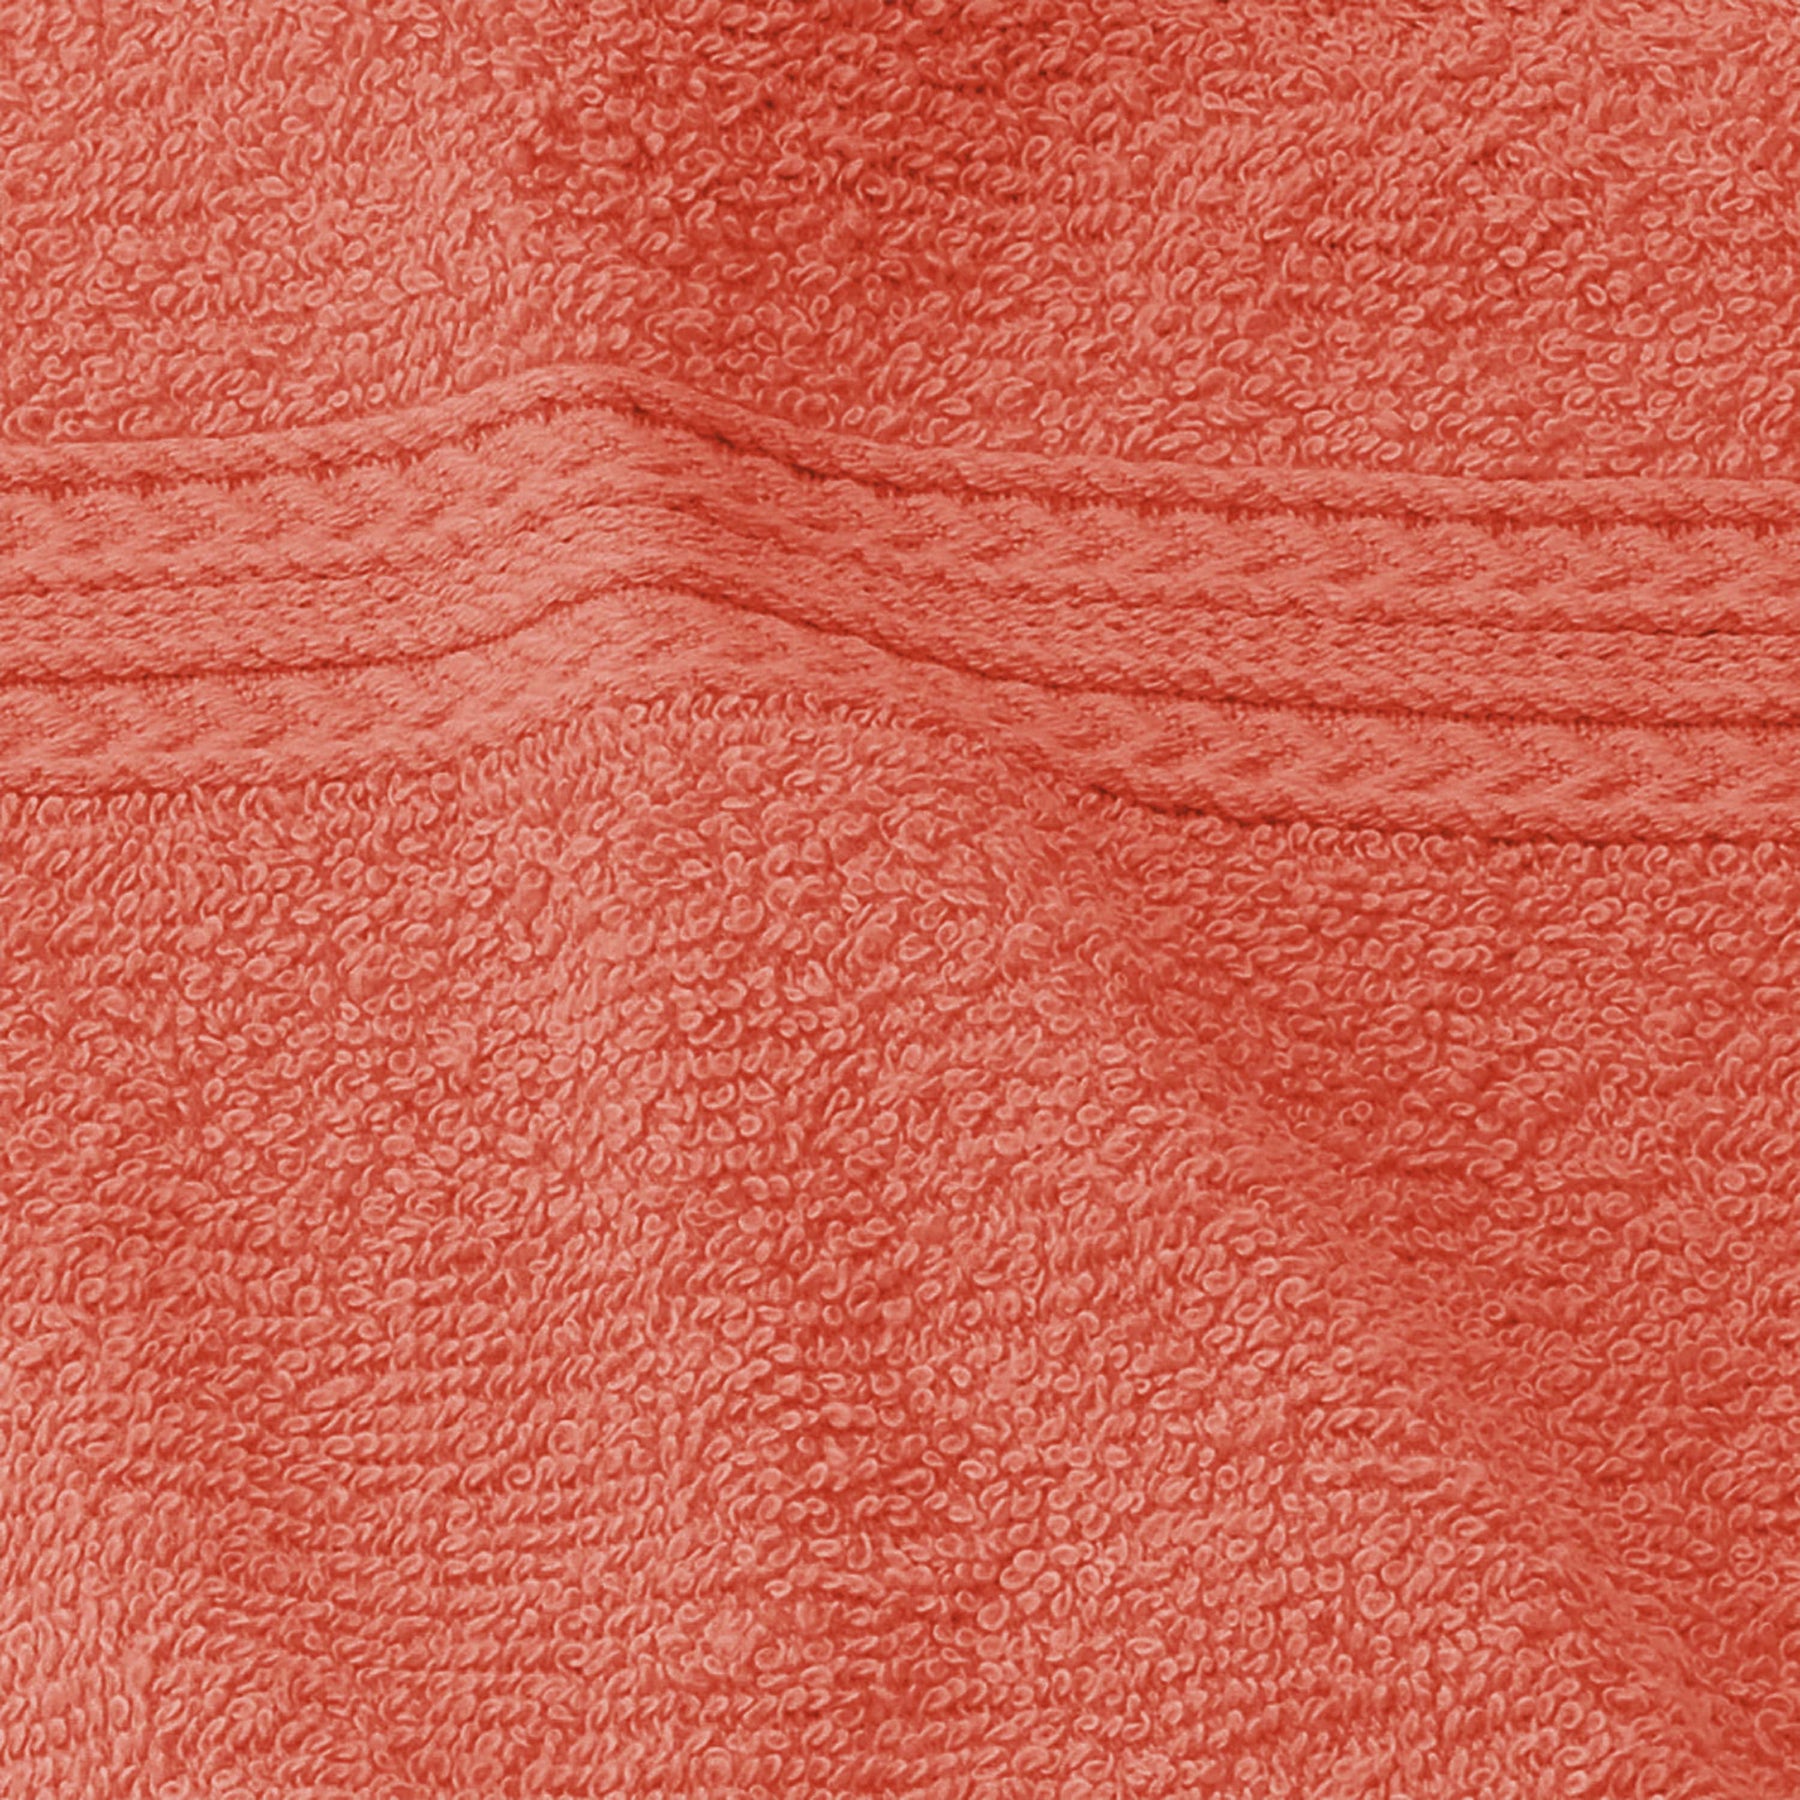 Superior Eco-Friendly Ring Spun Cotton 6-Piece Hand Towel Set -  Coral